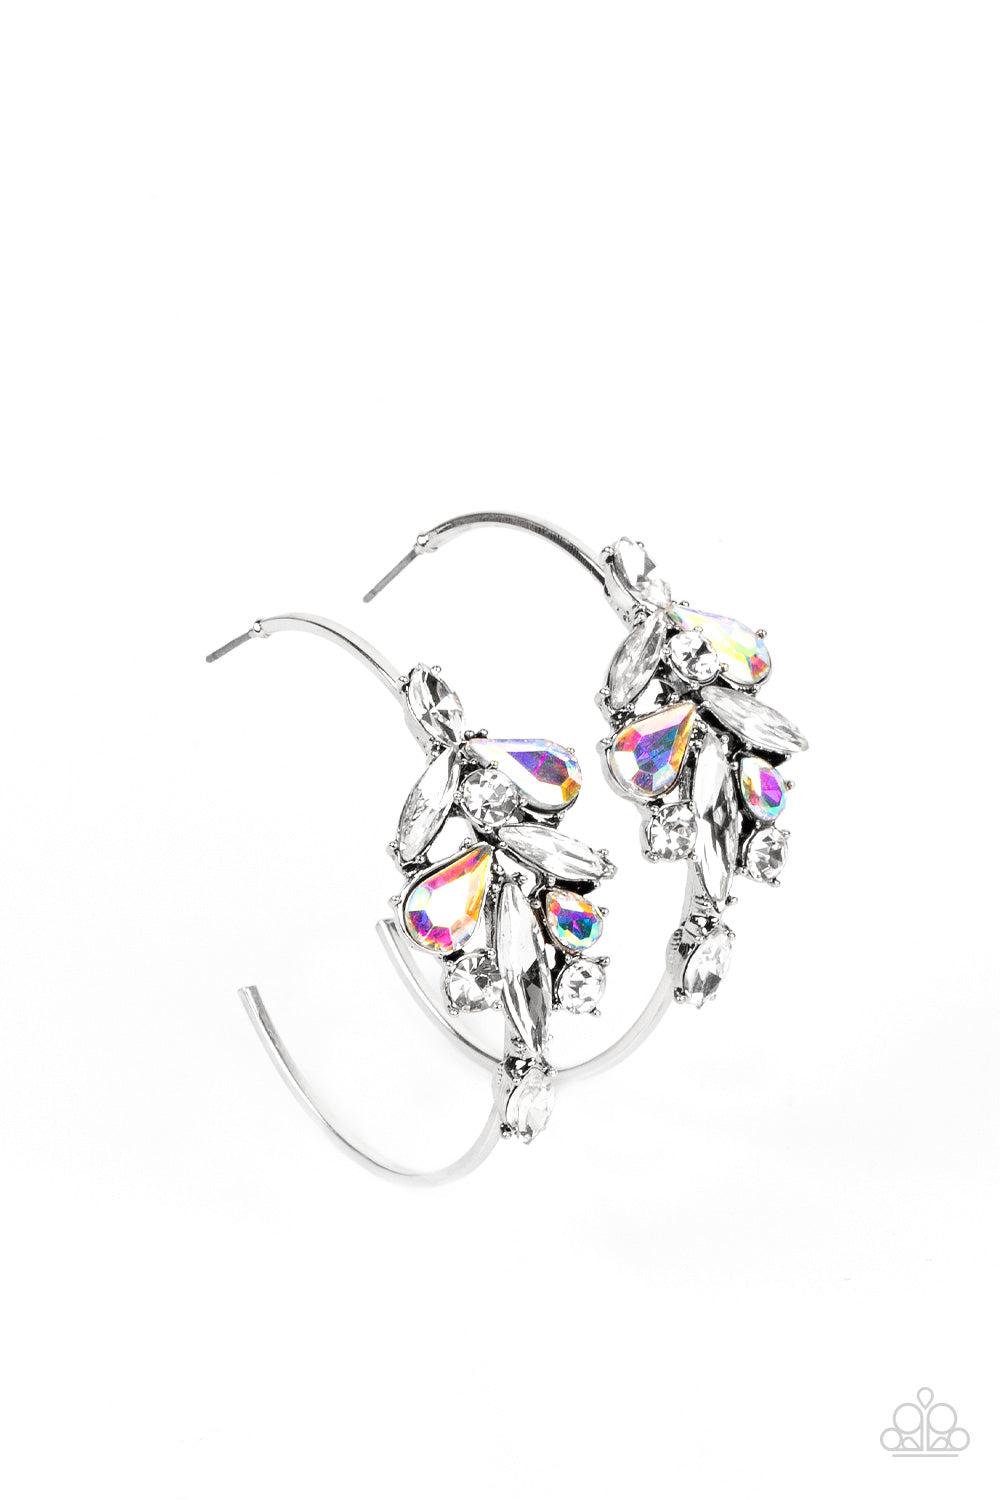 Arctic Attitude Multi Iridescent Rhinestone Hoop Earrings - Paparazzi Accessories- lightbox - CarasShop.com - $5 Jewelry by Cara Jewels